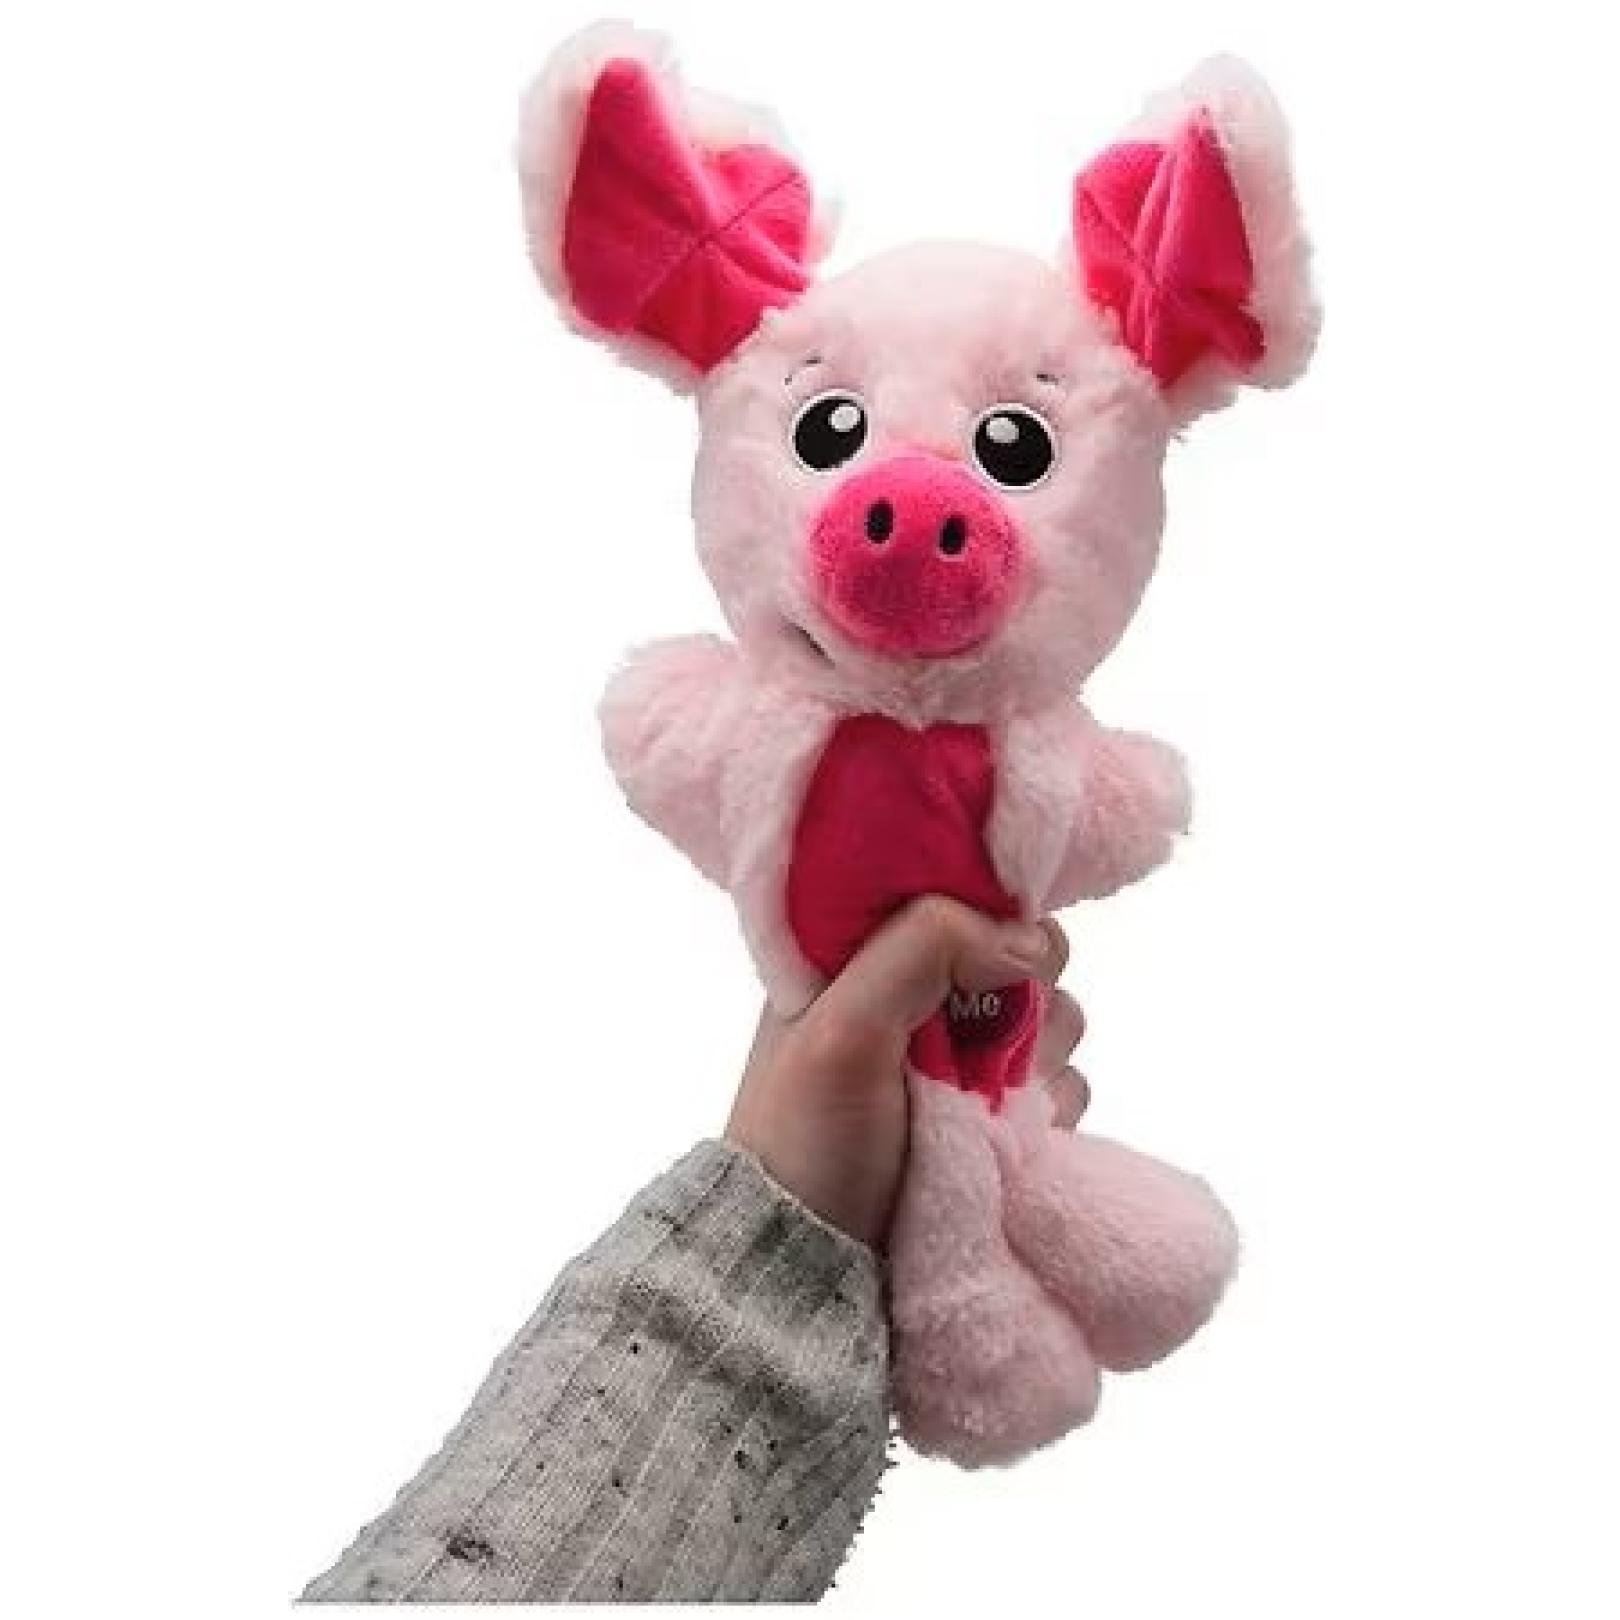 Plush pig dog toy